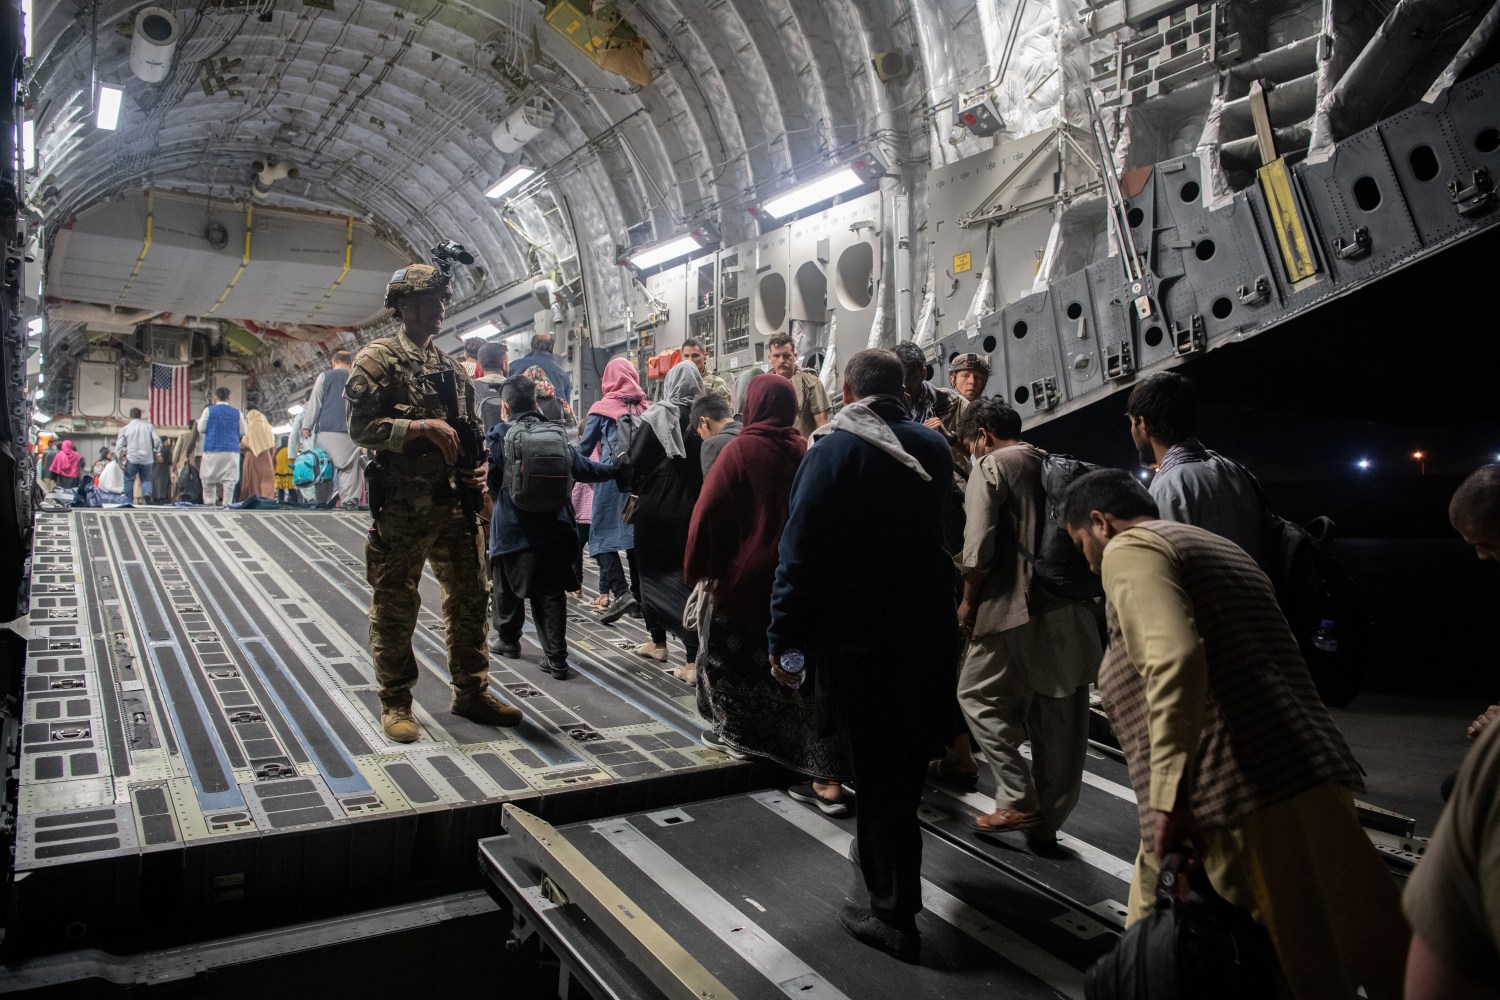 Afghans board a U.S. Air Force C-17 Globemaster III transport plane during an evacuation at Hamid Karzai International Airport, Afghanistan, August 22, 2021. U.S. Air Force/Handout via REUTERS